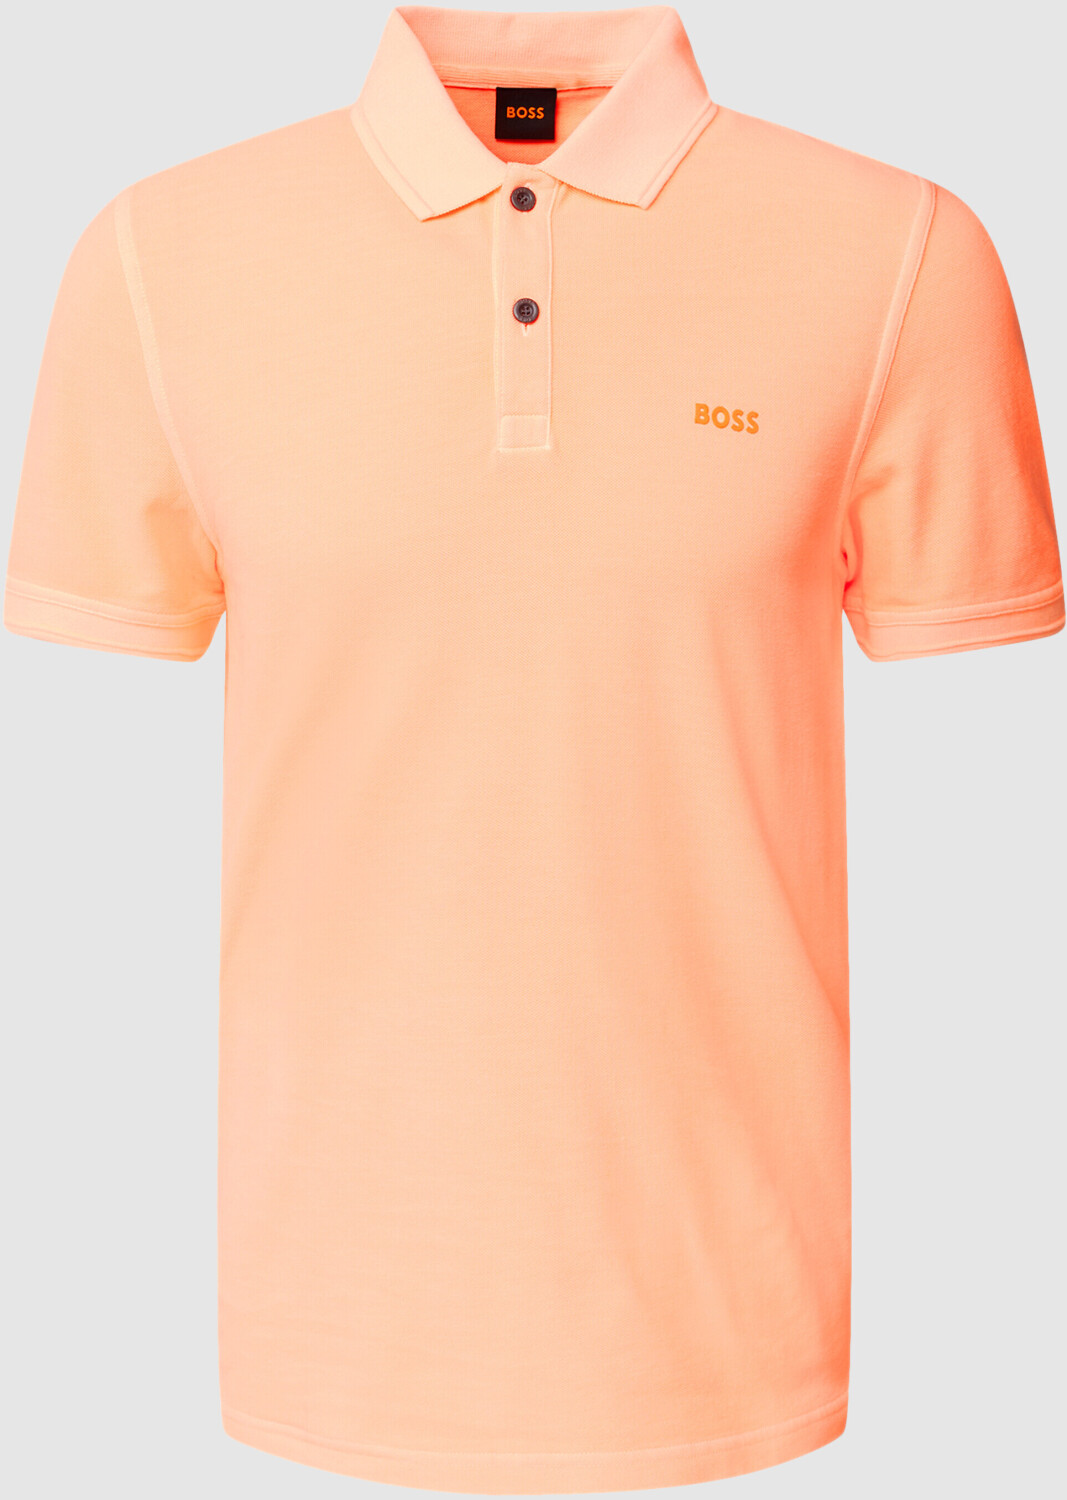 Hugo Boss orange Prime Preisvergleich | Slim-Fit (50468576-827) bei 63,95 Poloshirt € ab